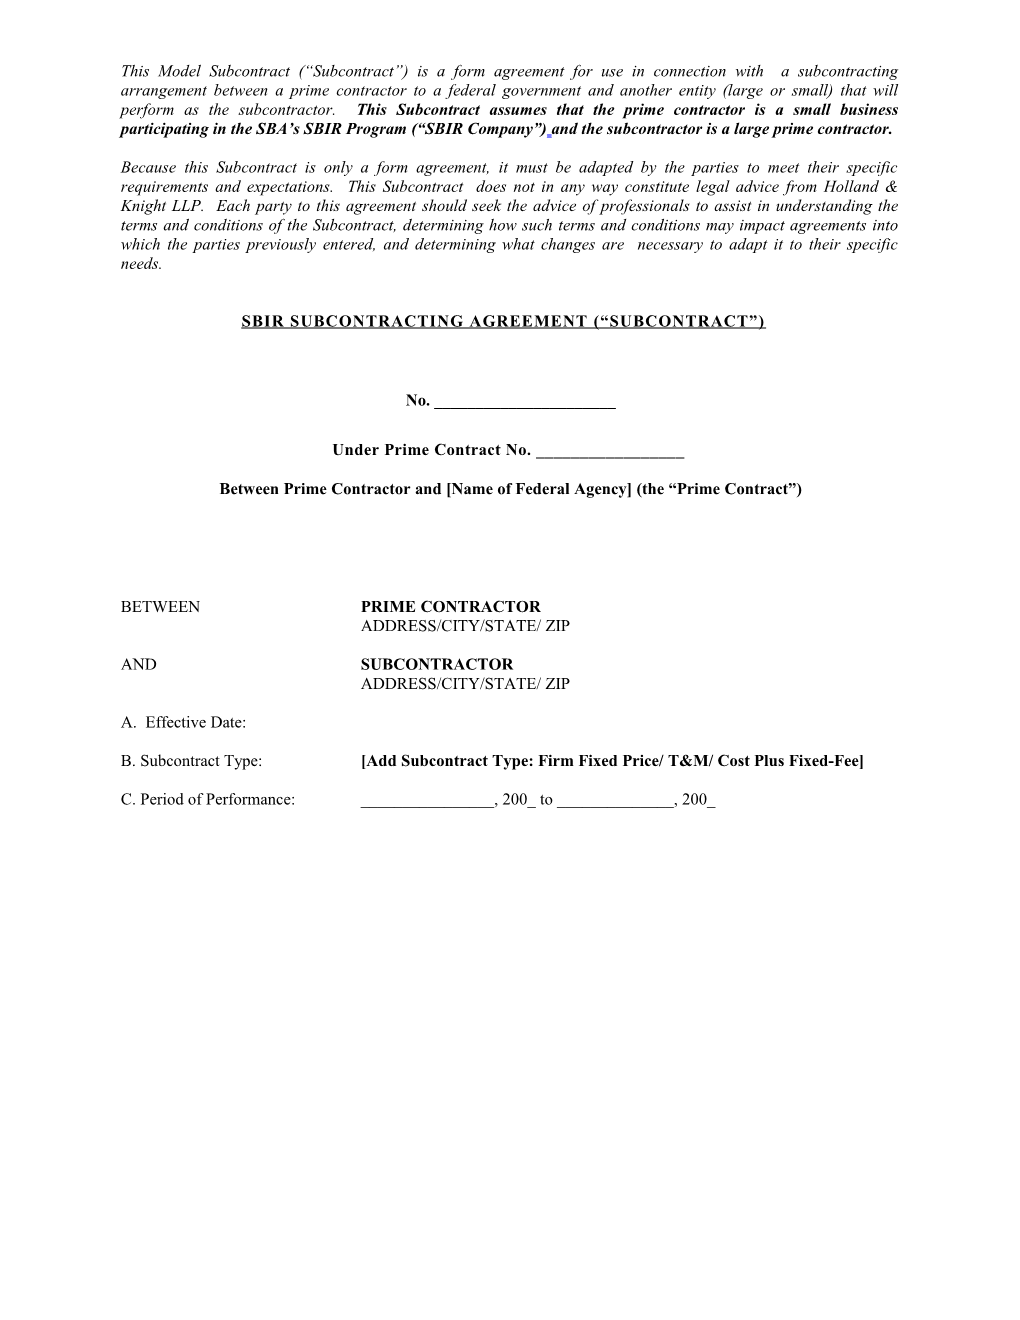 Sbir Subcontracting Agreement ( Subcontract )